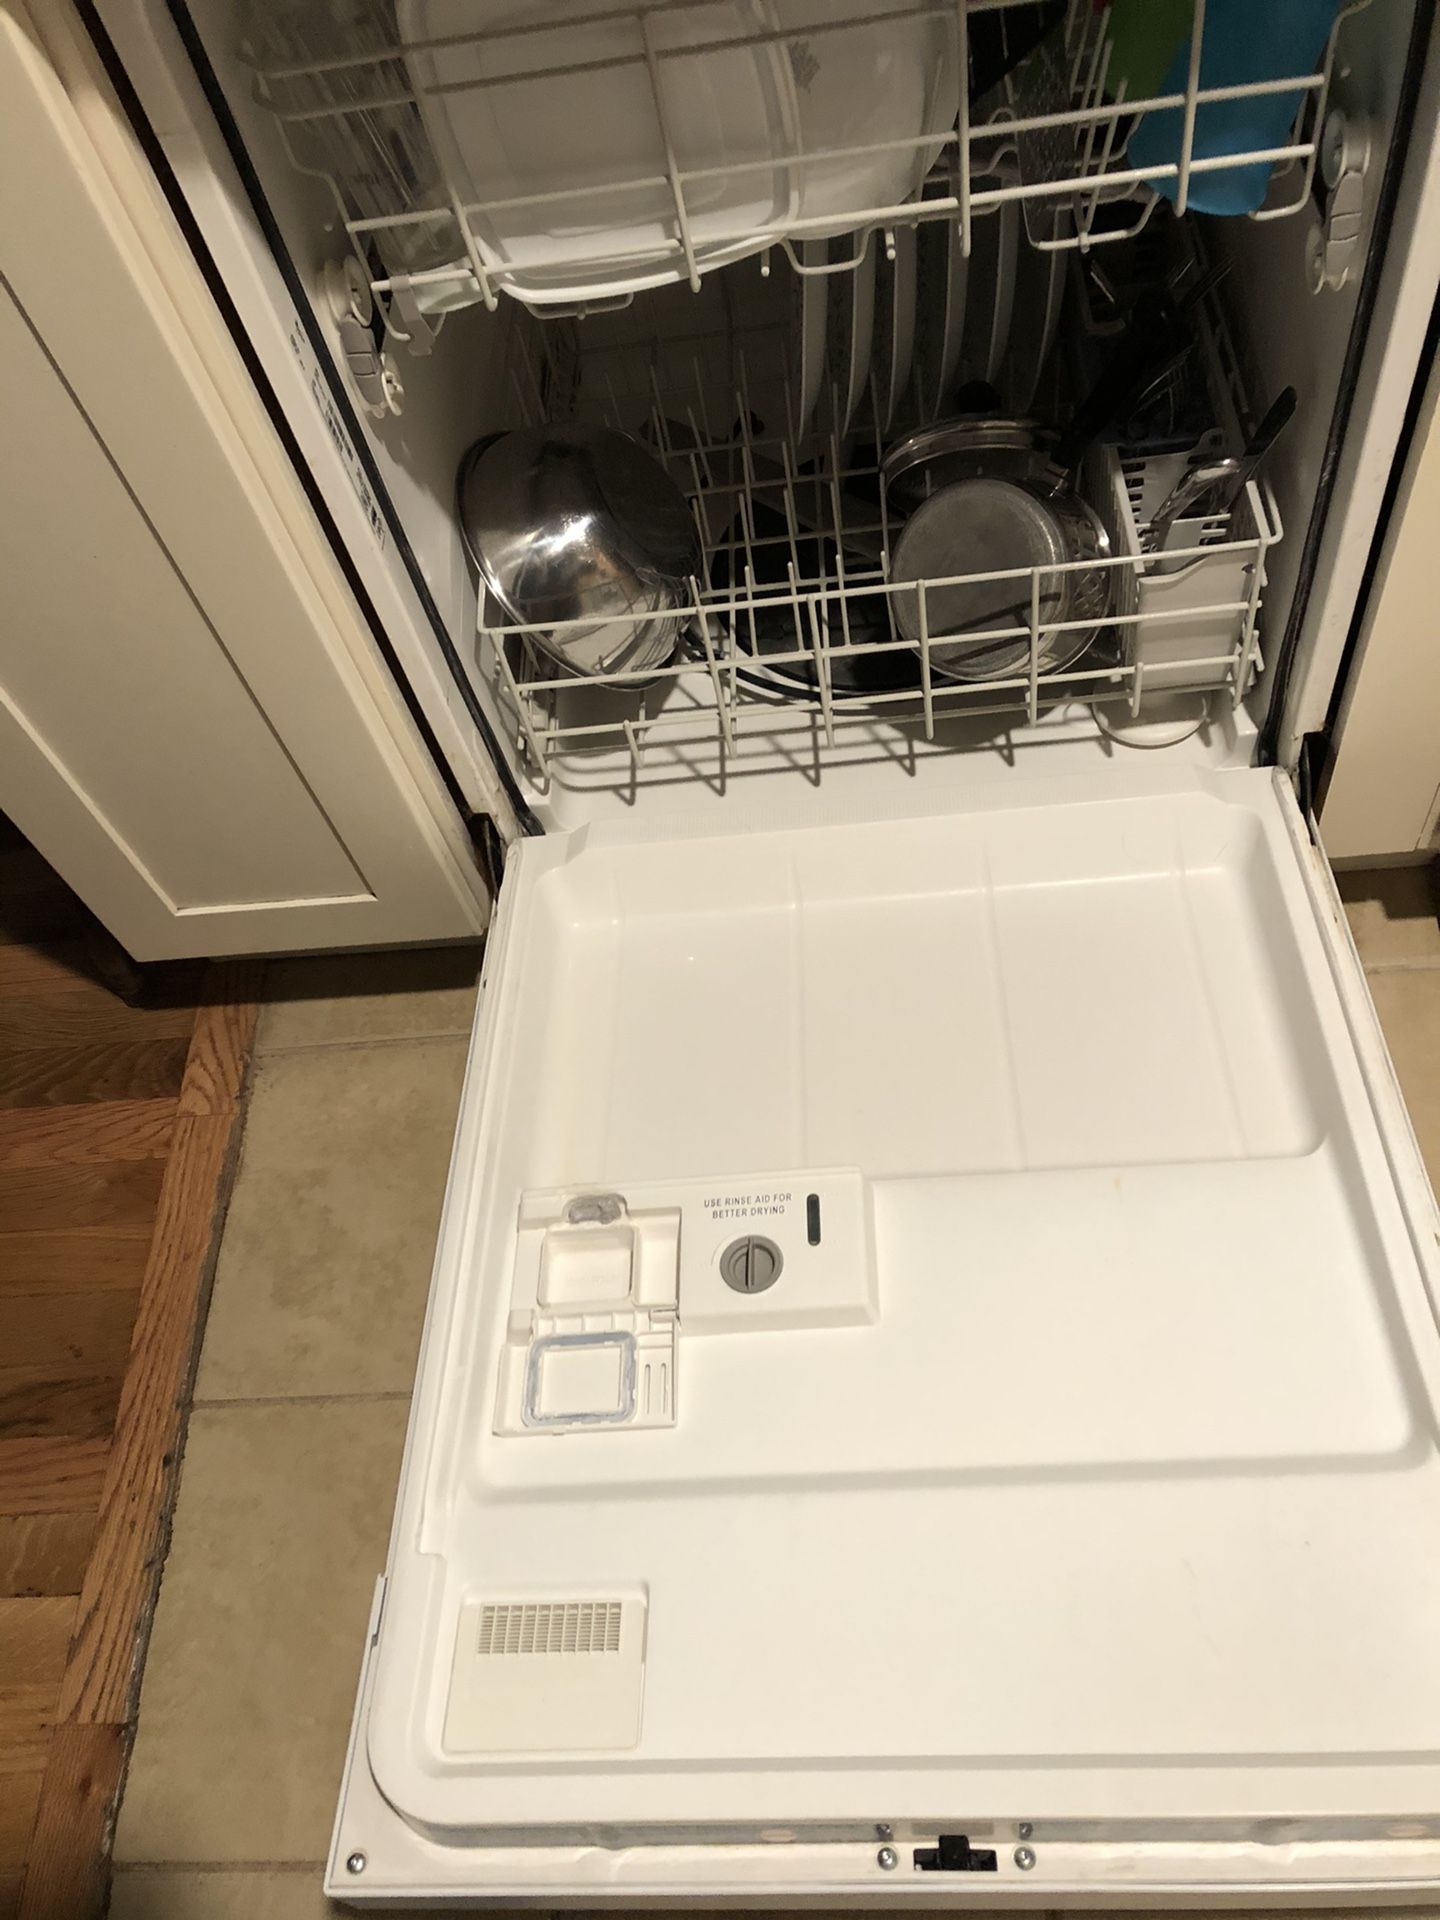 Whirlpool dishwasher works great